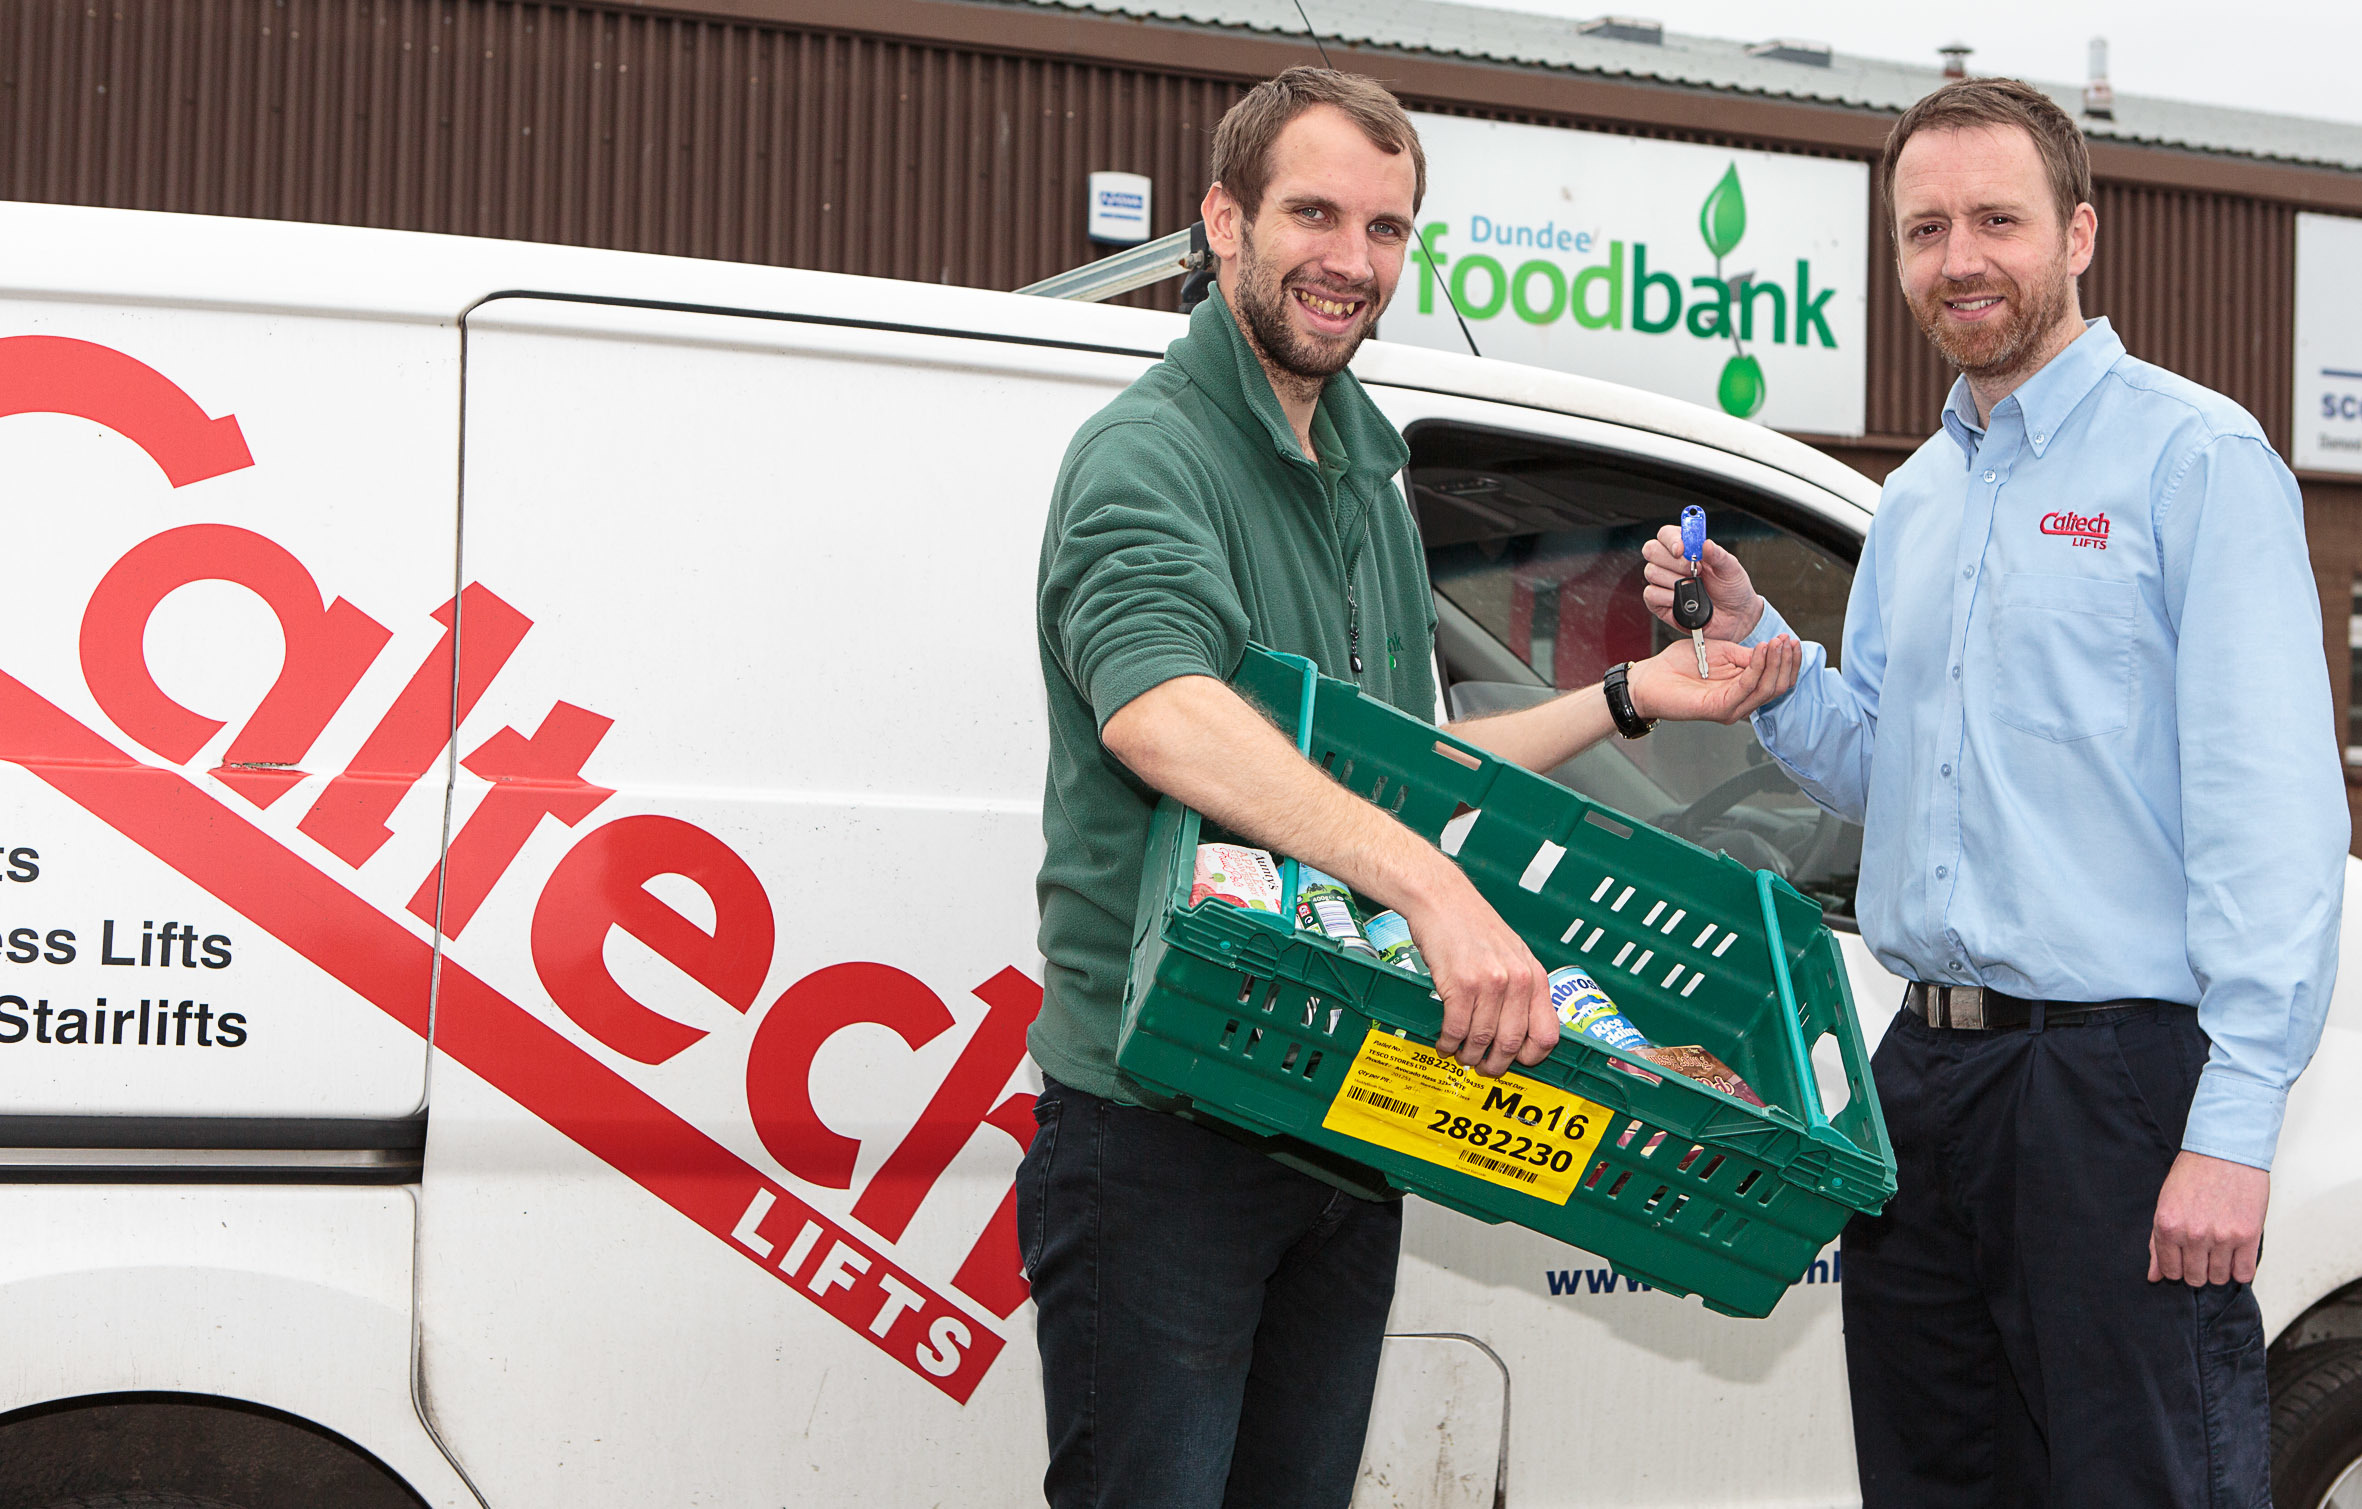 Caltech Lifts managing director Andrew Renwick (right) hands over their spare van to Dundee Foodbank warehouse coordinator Michael Calder.